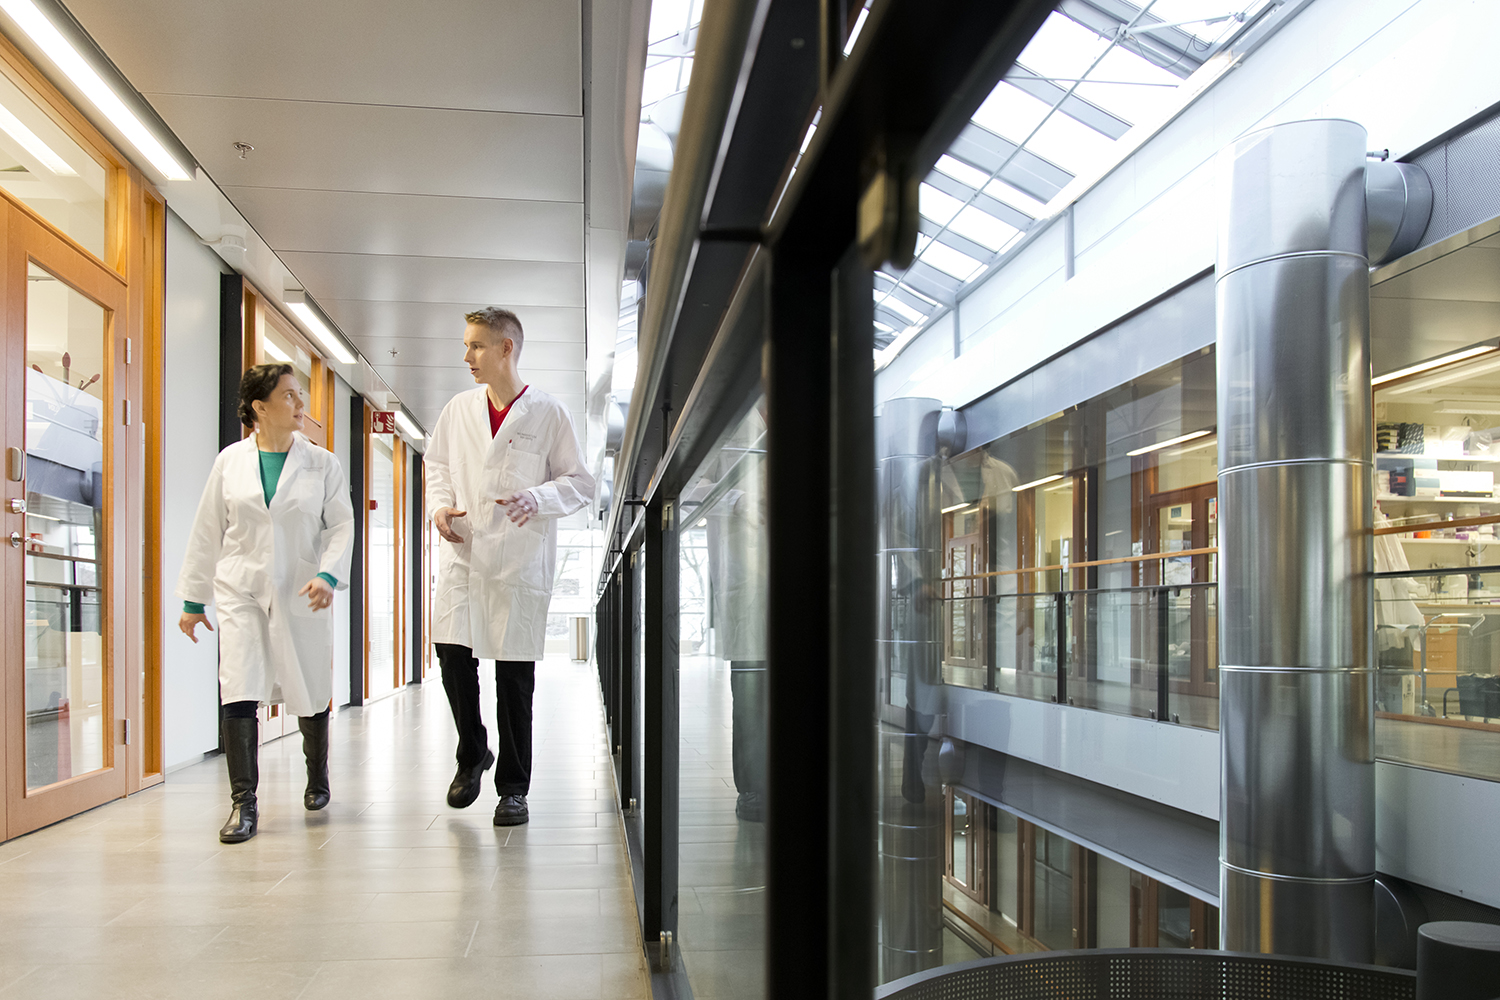 Two people wearing white coats walking Biomedicum's corridor